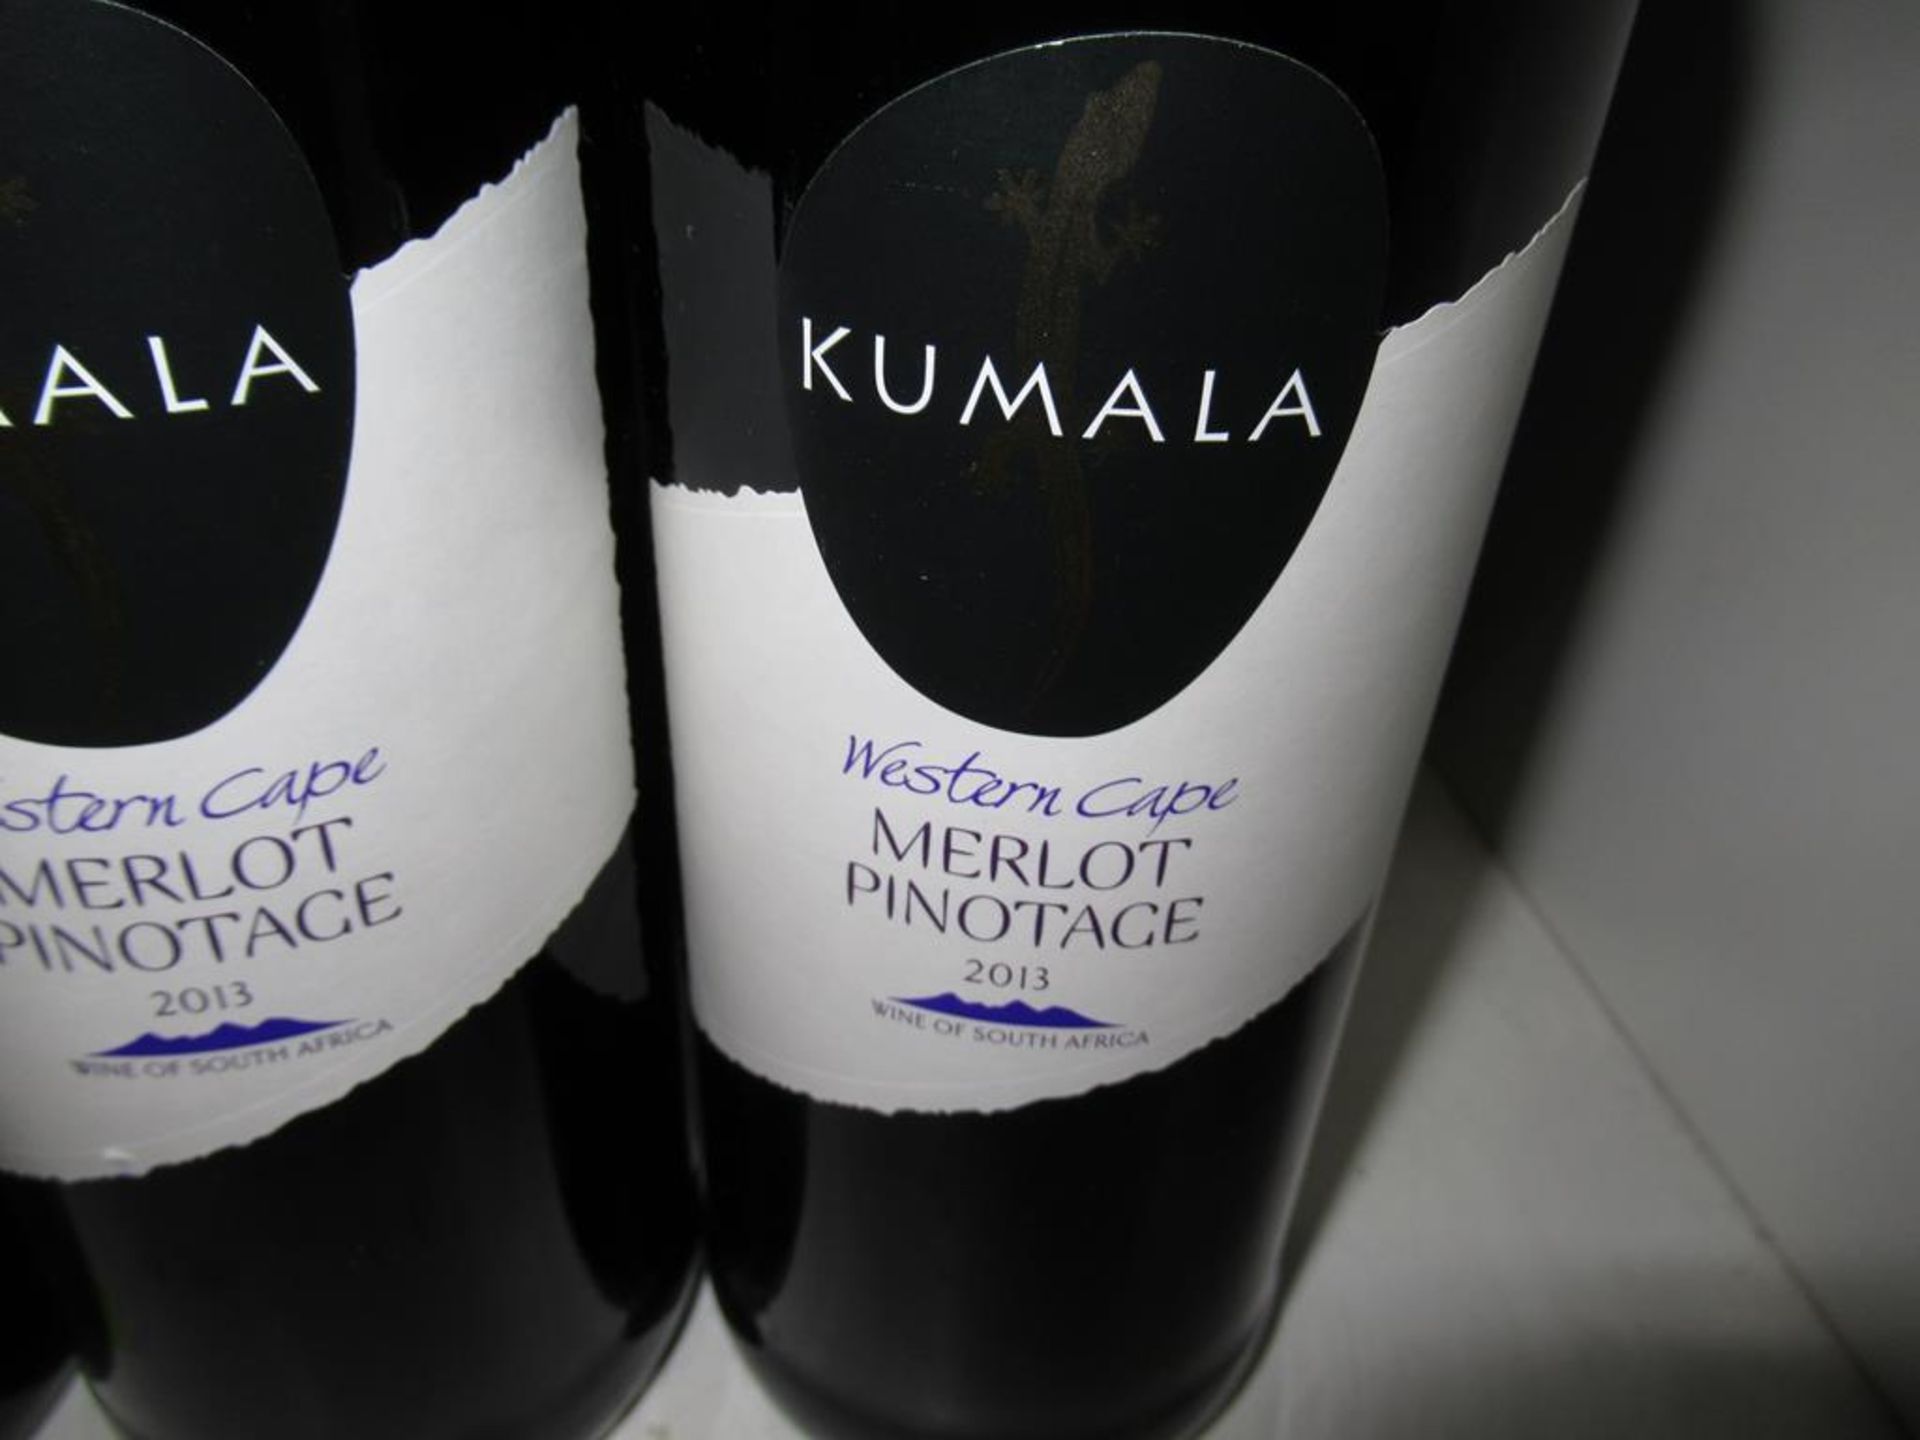 Sixteen bottles of Kumala Western Cape Merlot Pinotage 2013 red wine and four bottles of Kumala Cabe - Image 2 of 5